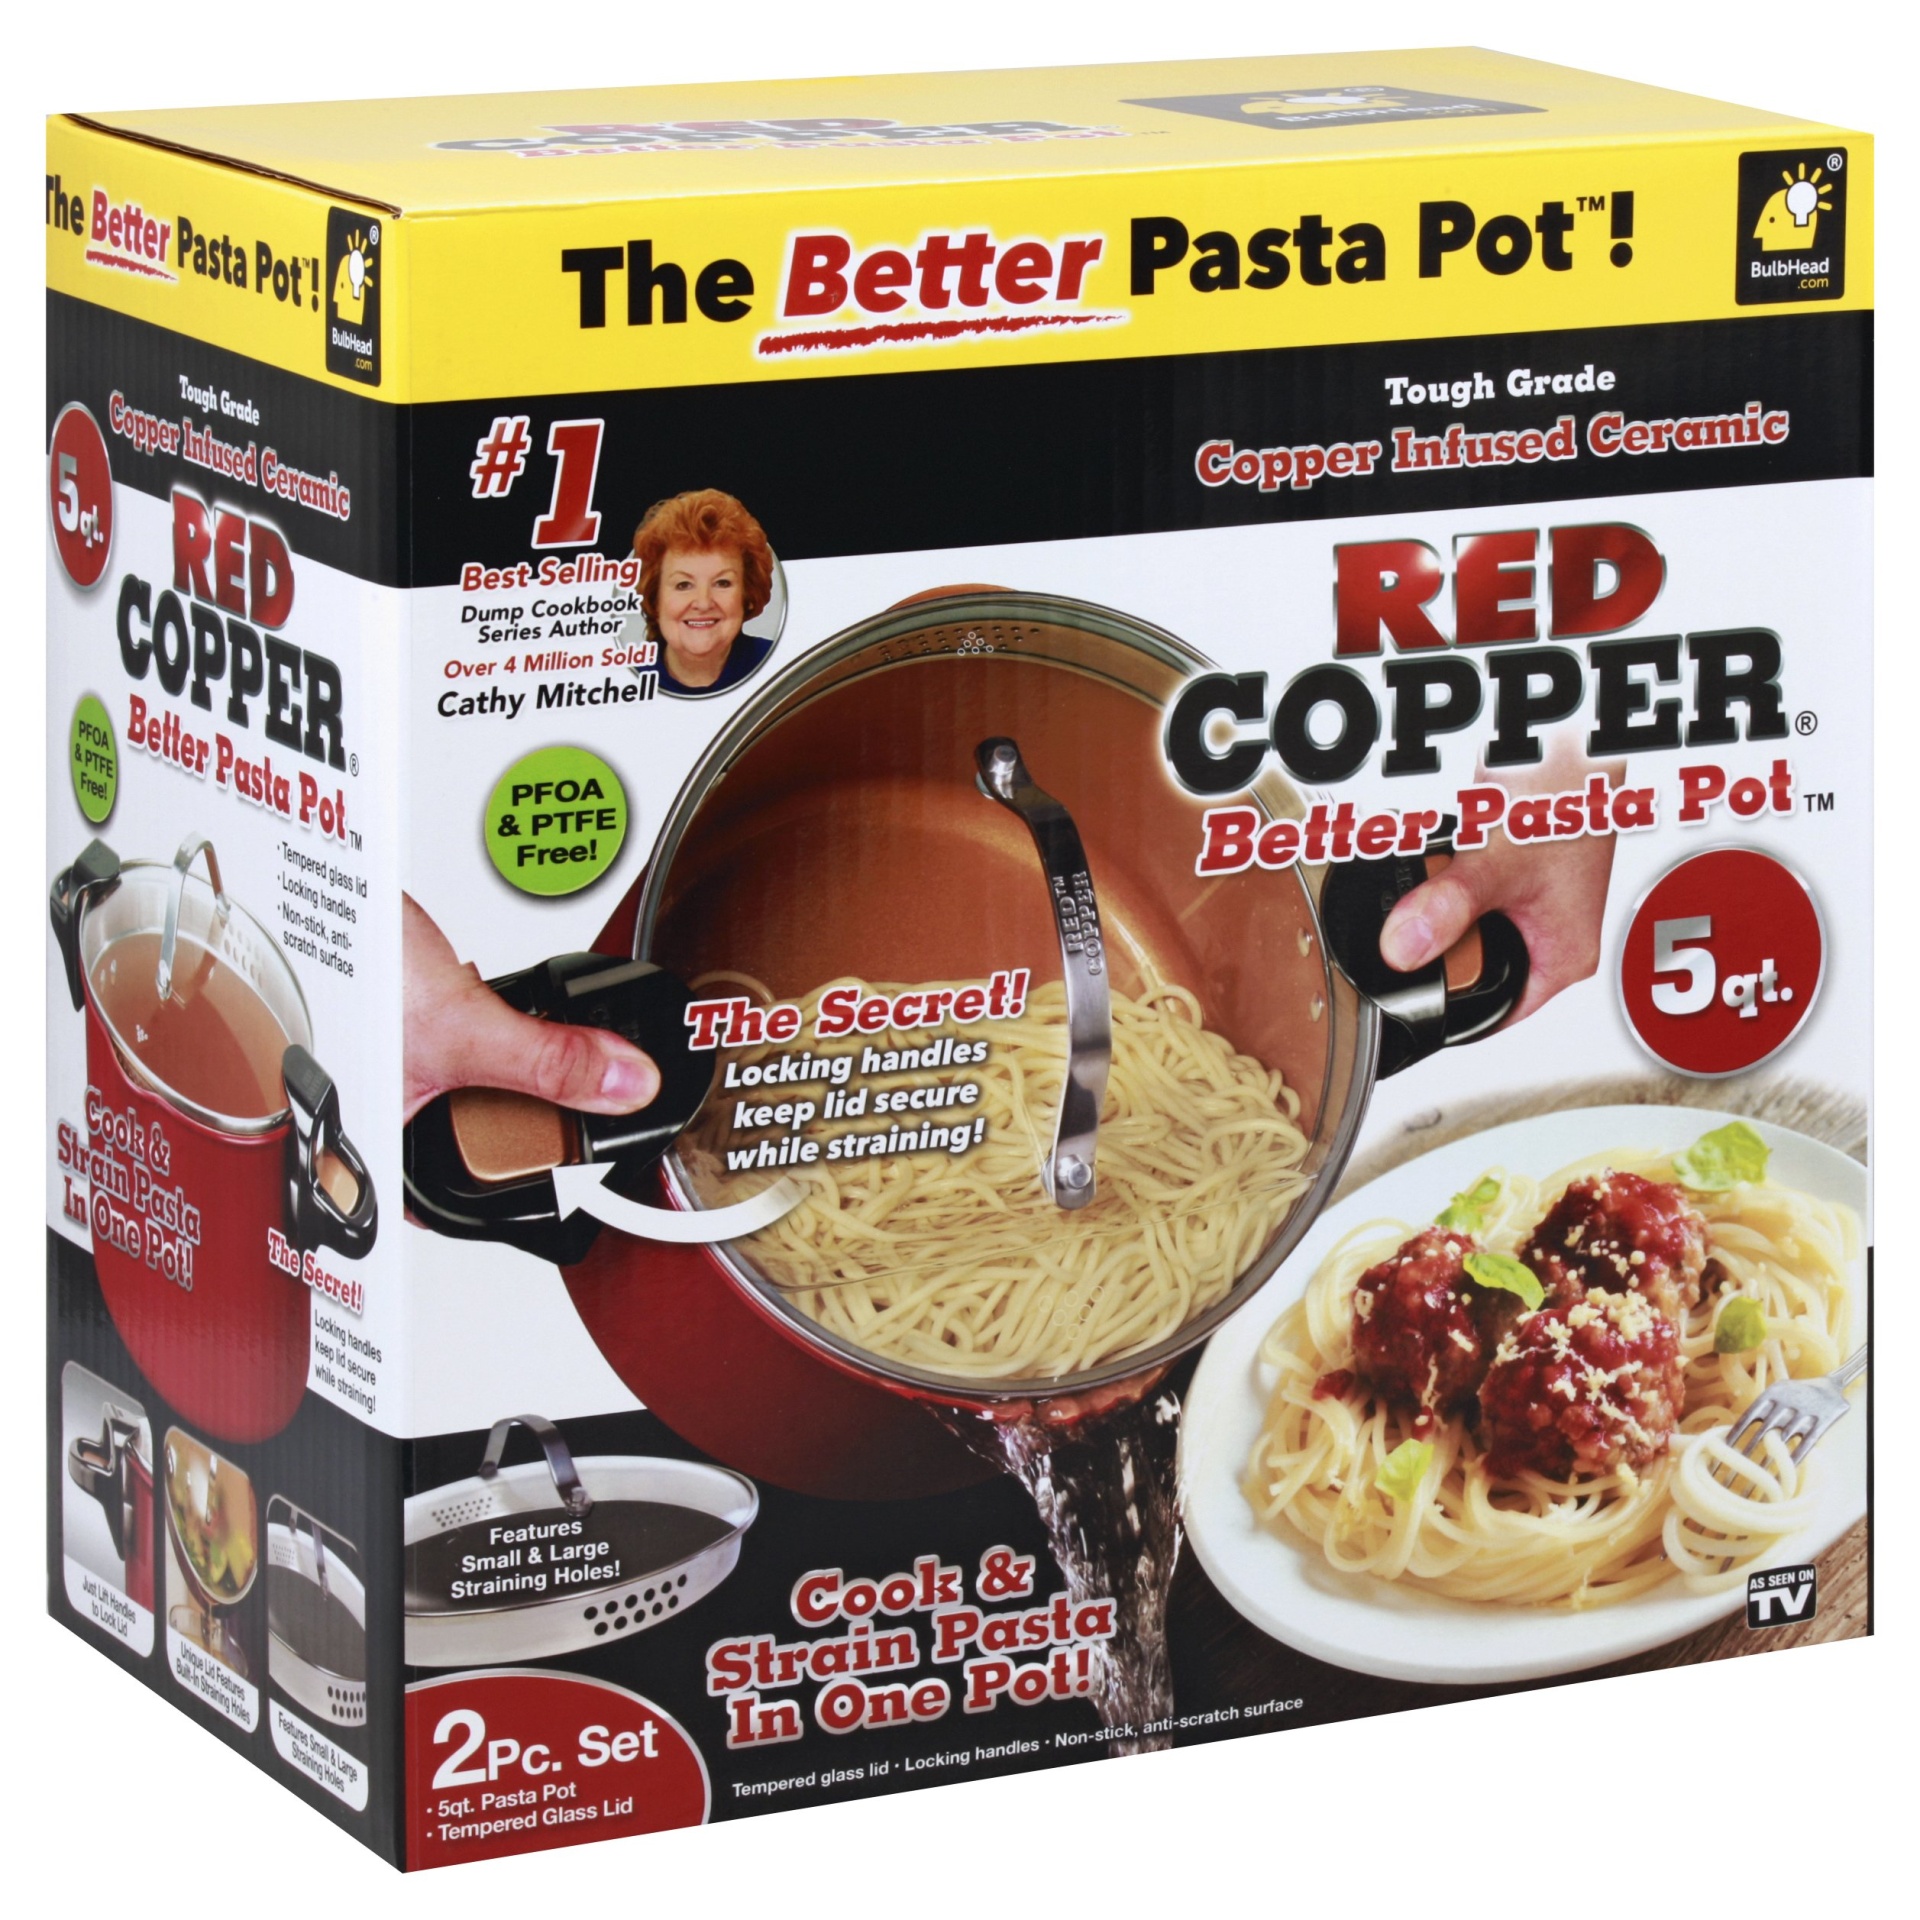 Red Copper Better Pasta Pot